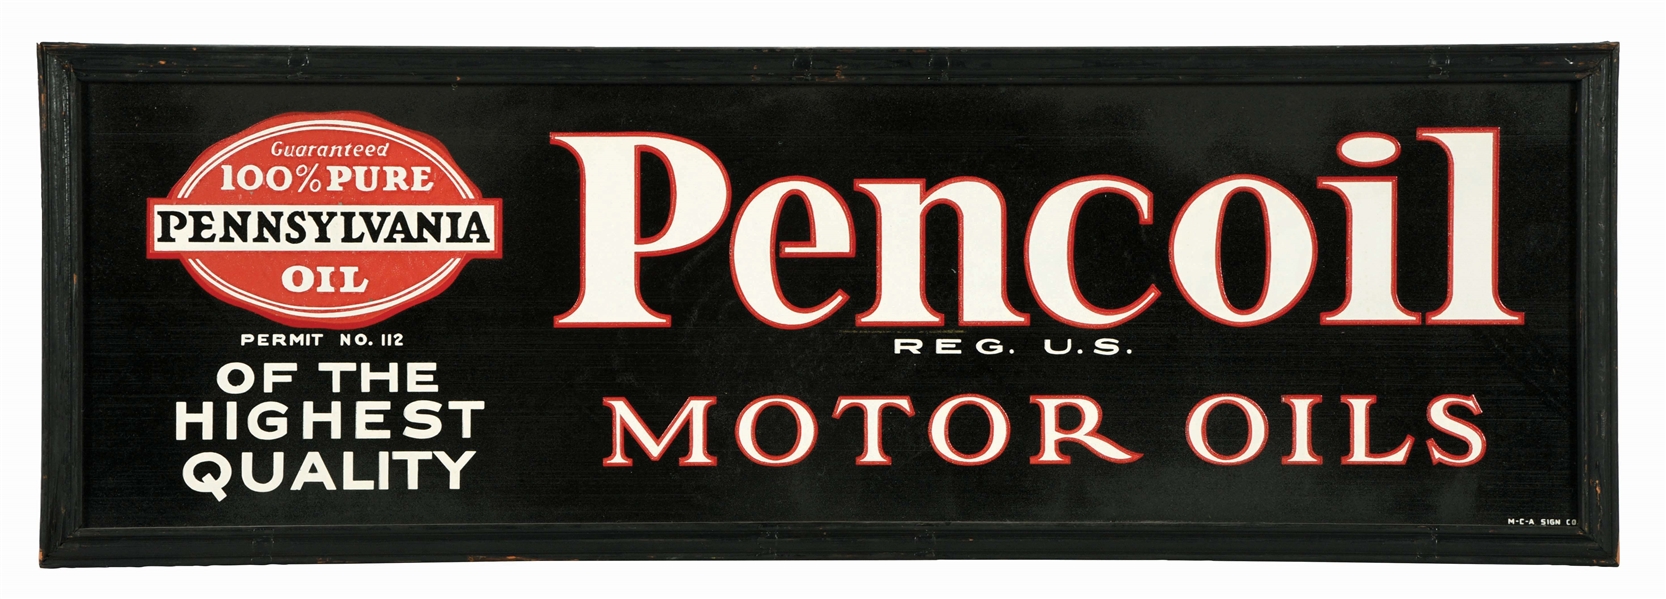 PENCOIL MOTOR OILS TIN SERVICE STATION SIGN W/ ORIGINAL WOOD FRAME. 